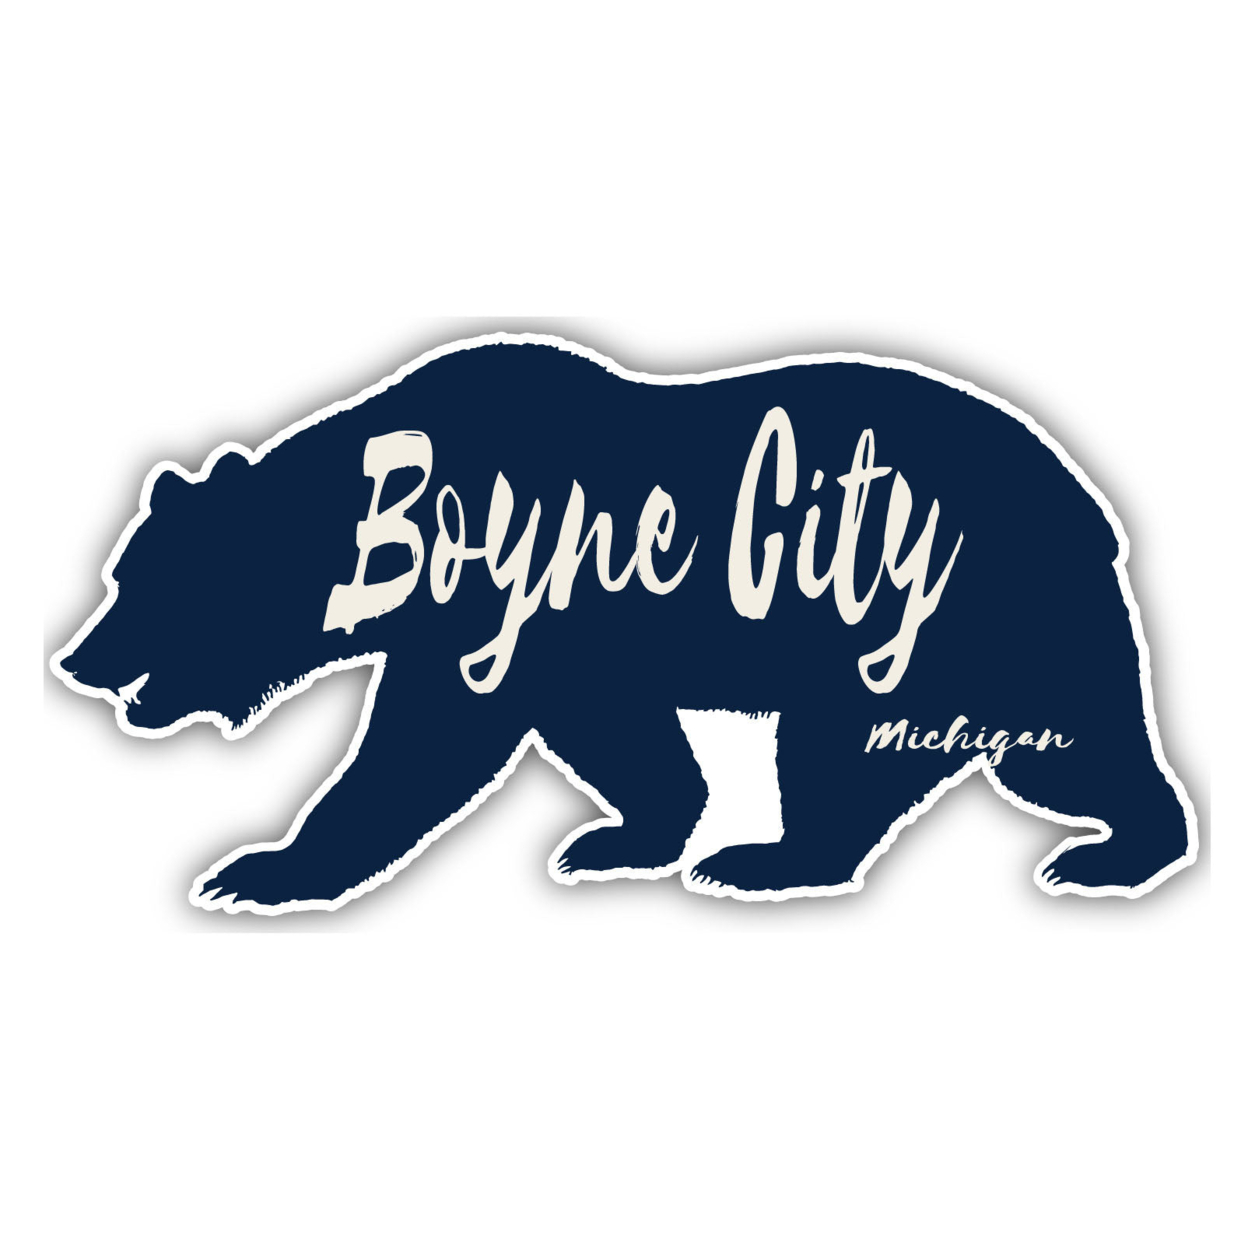 Boyne City Michigan Souvenir Decorative Stickers (Choose Theme And Size) - 4-Pack, 12-Inch, Adventures Awaits